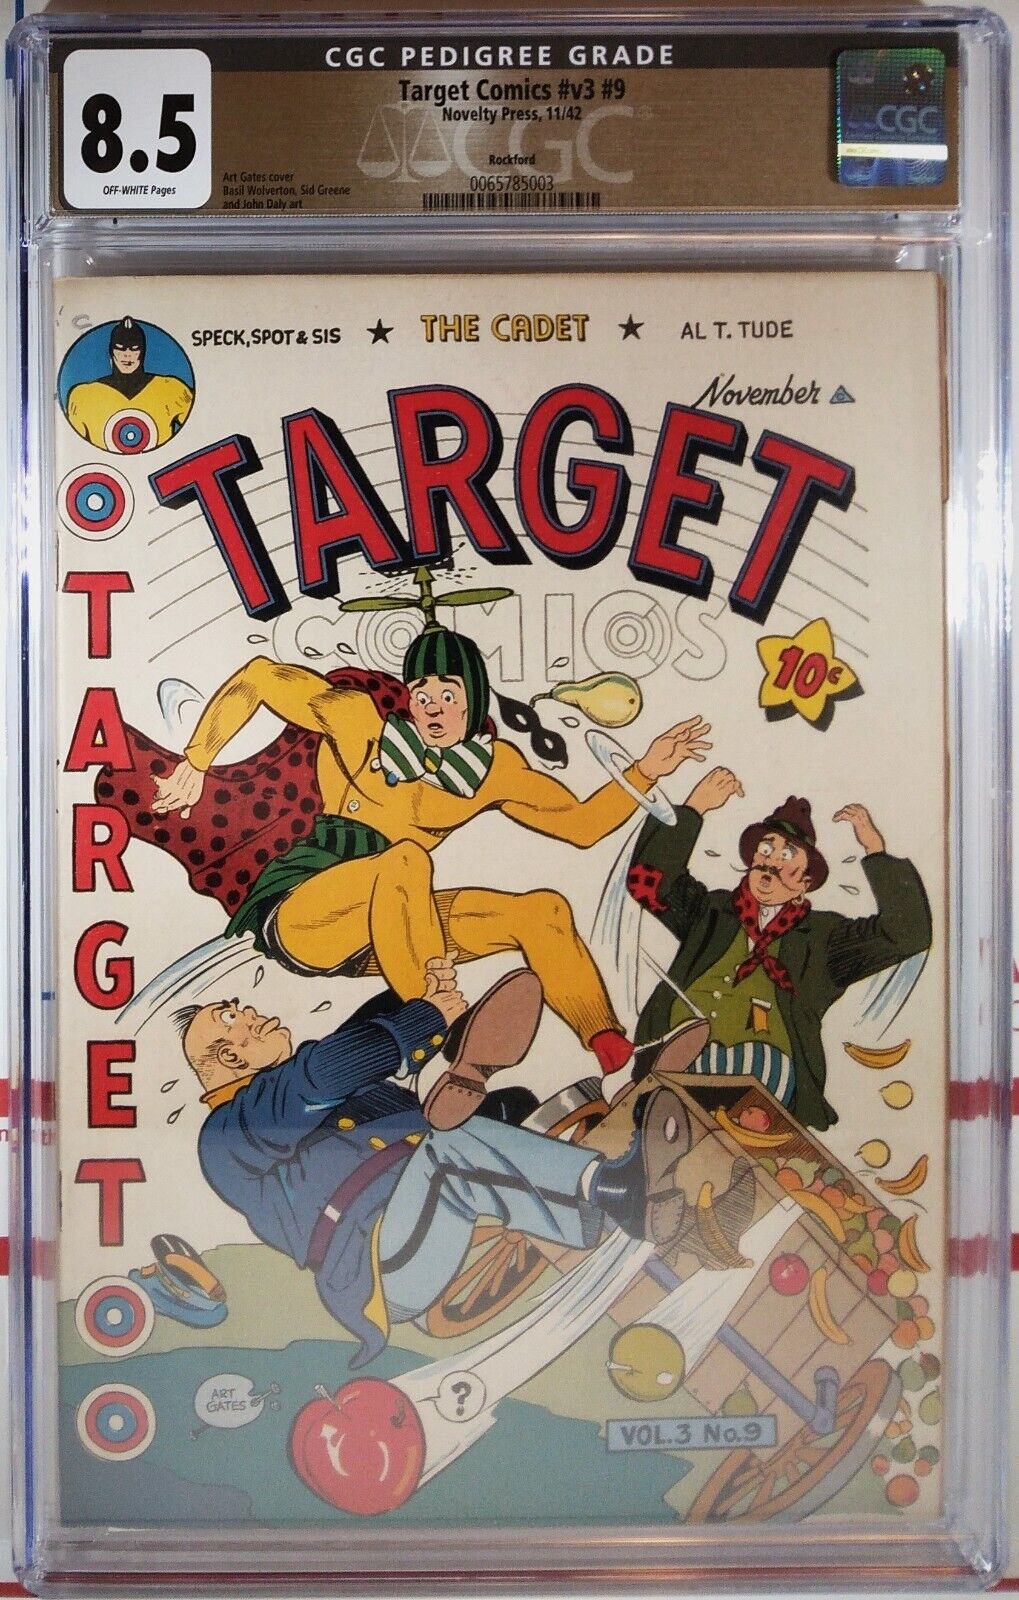 🎯 CGC ROCKFORD PEDIGREE TARGET COMICS V3 #9 NOVELTY PRESS 1942 BASIL WOLVERTON